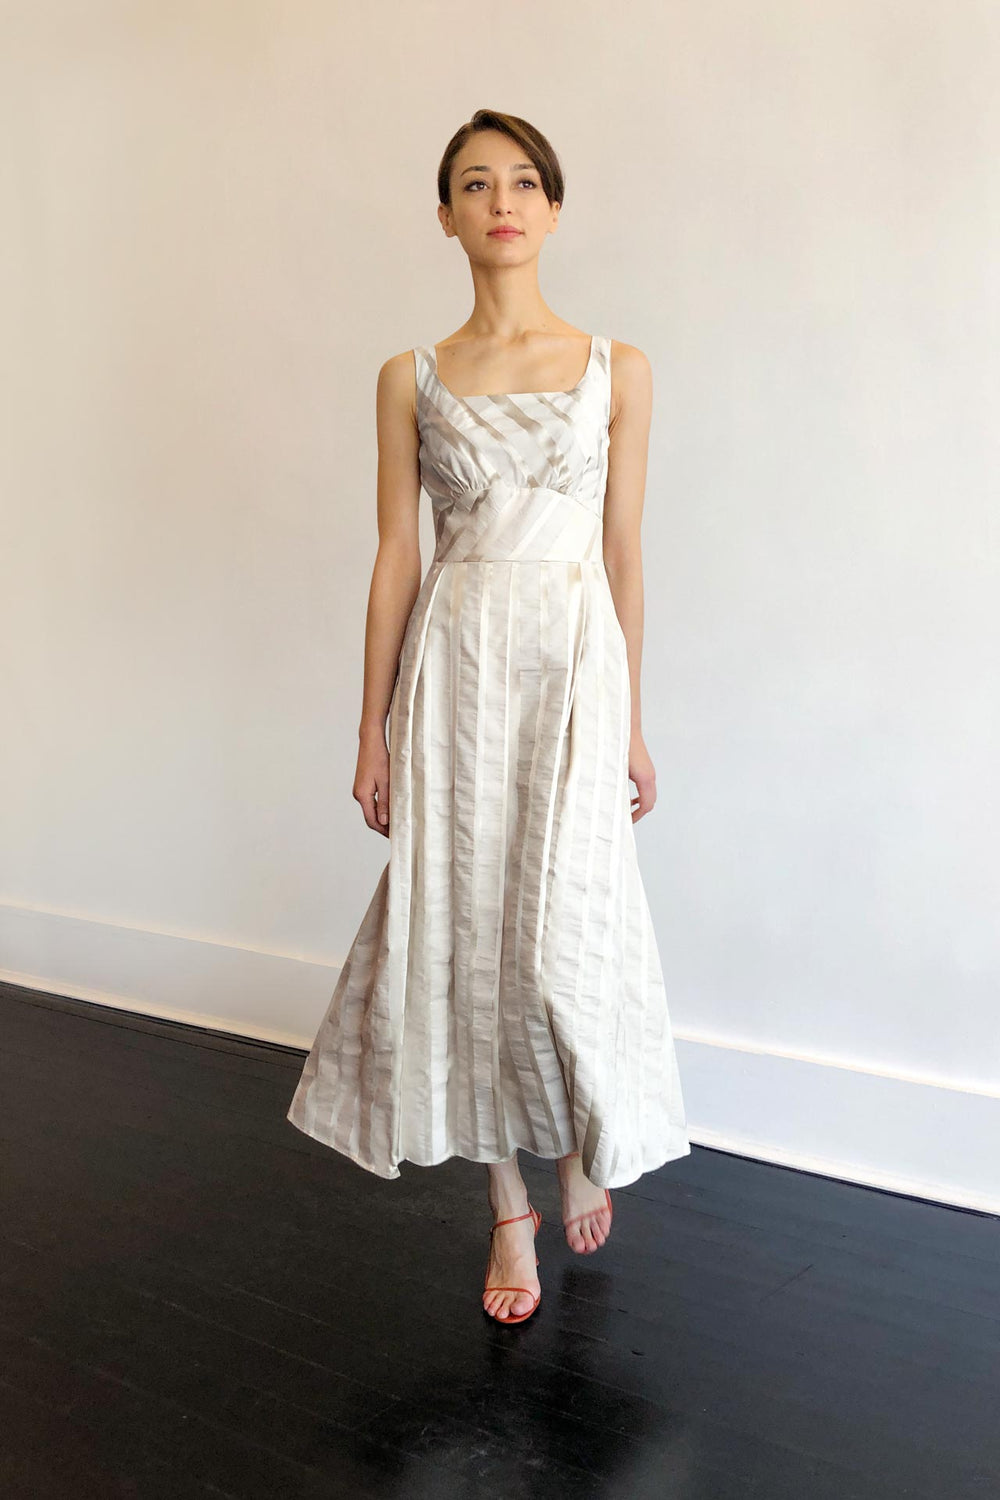 Fashion Designer CARL KAPP collection | Lyria White Dress | Sydney Australia